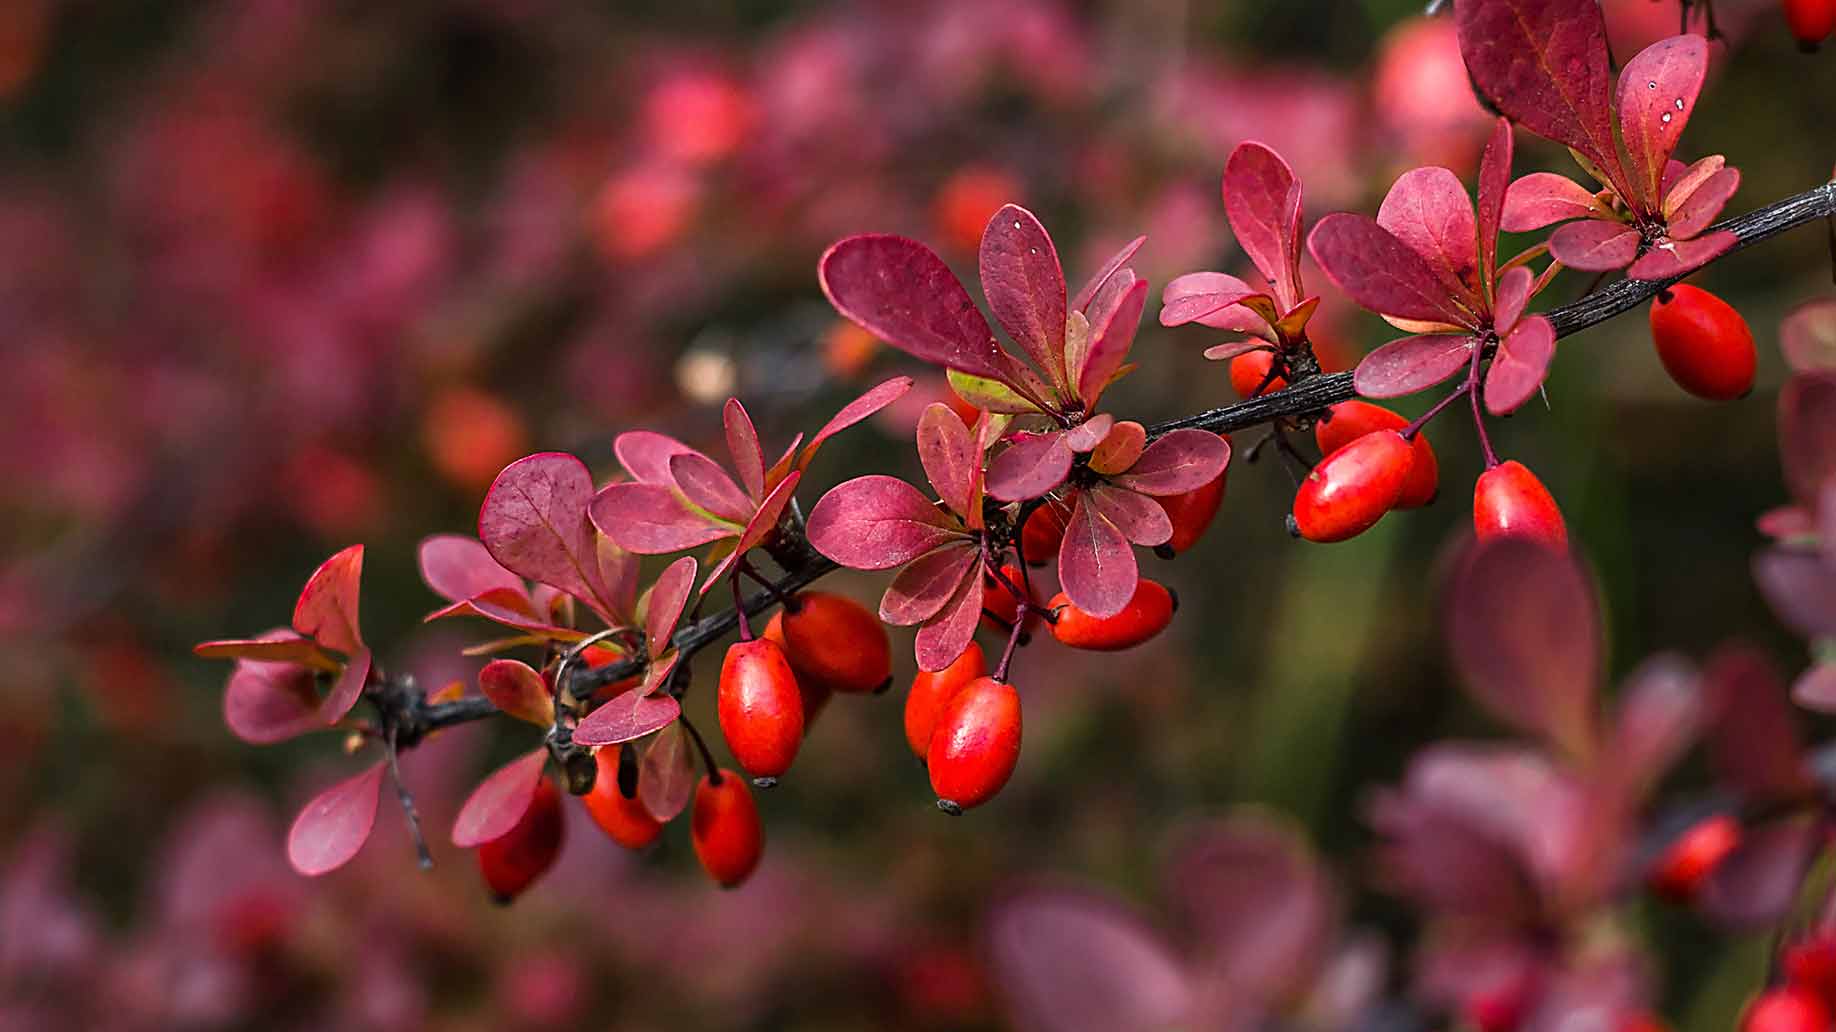 barberry berberis vulgaris red berries pink flowers inflammation acne natural remedies